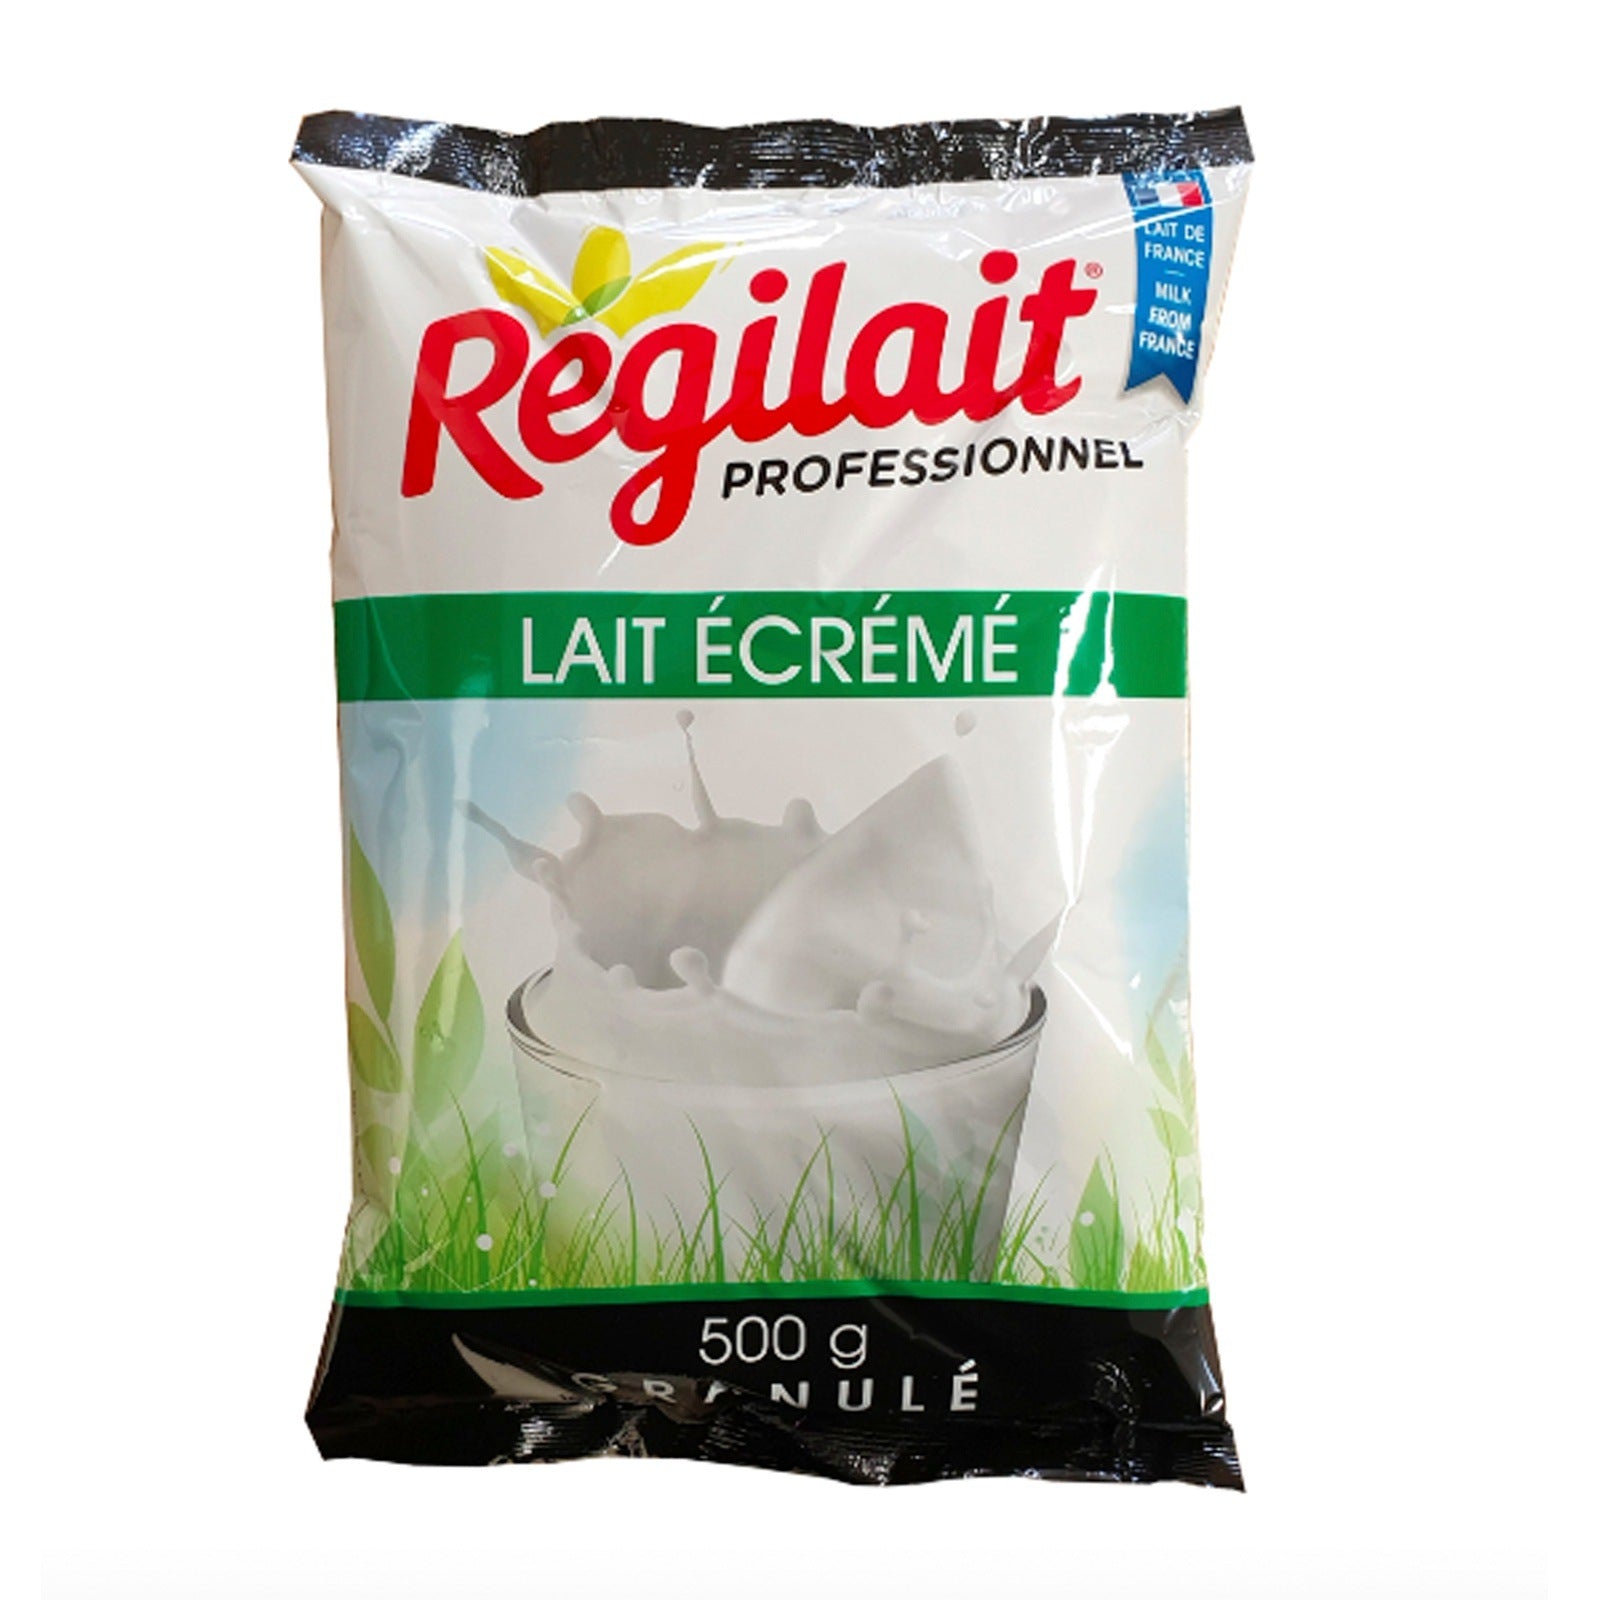 A single packet of Regilait professional whitener. 500g Granulated instant milk powder. LAit Ecreme